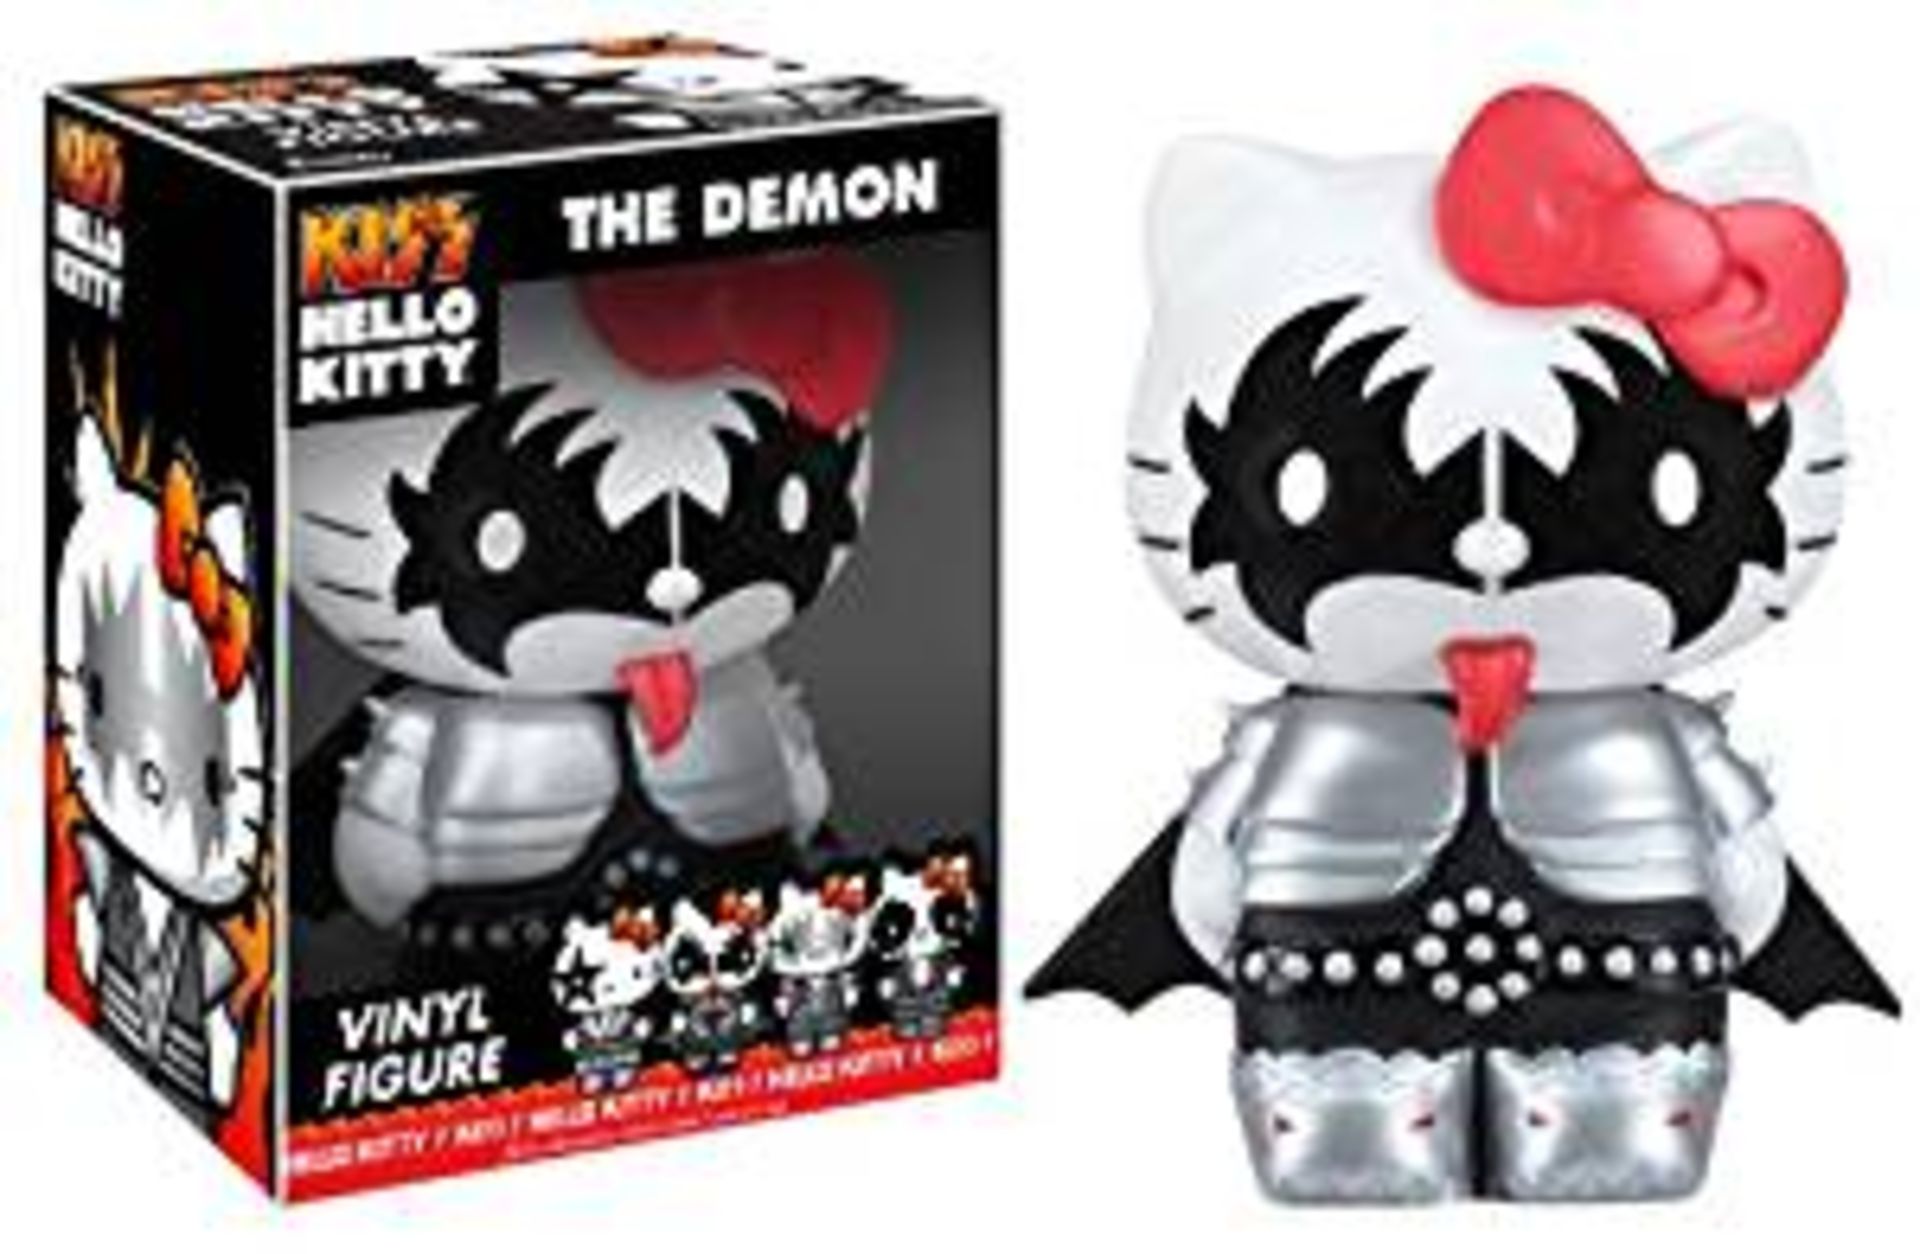 25 x Hello Kitty 'The Demon' Kizz themed vinyl figure